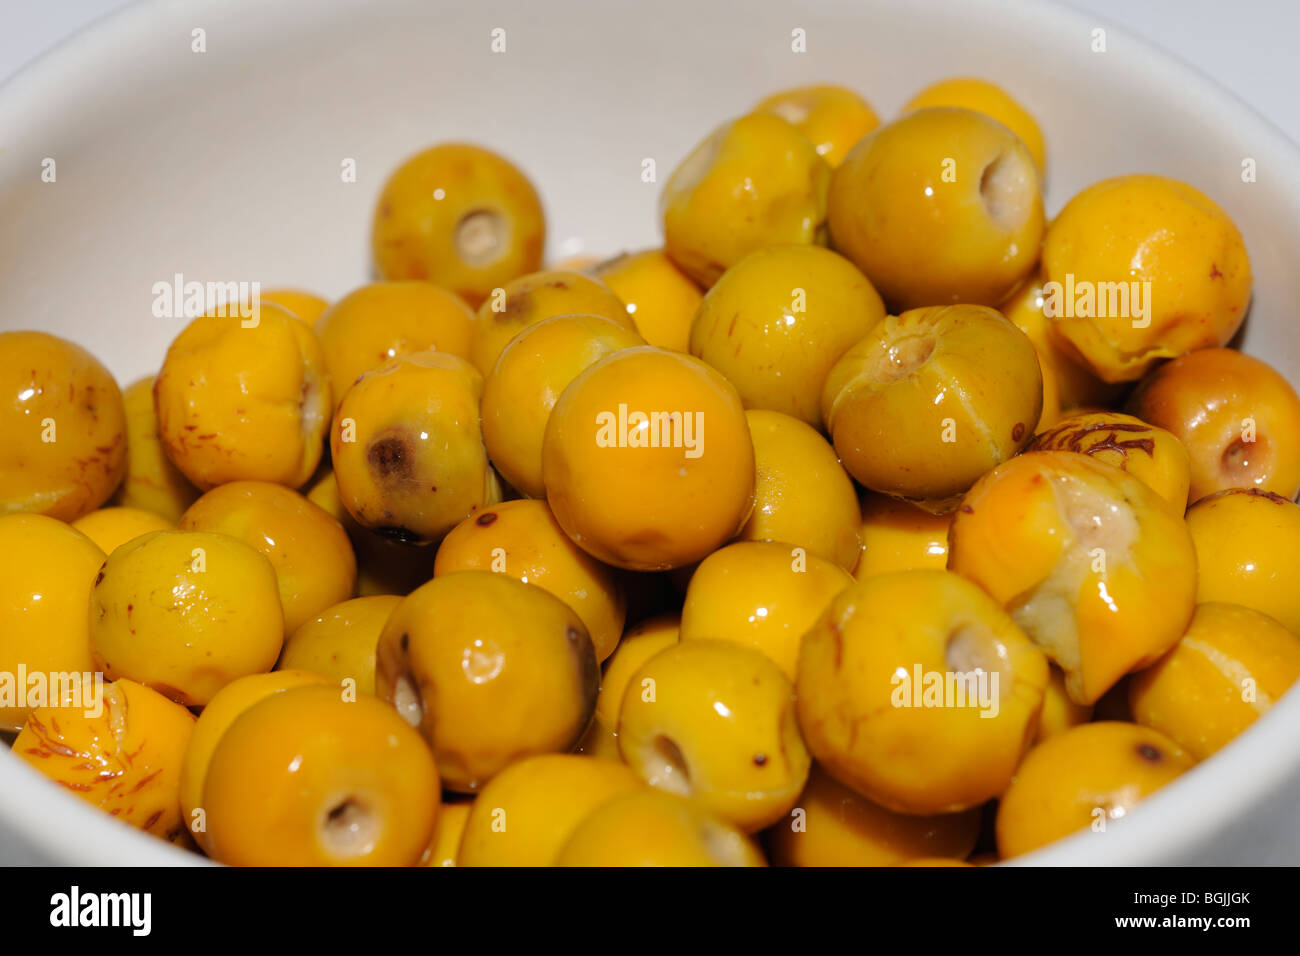 Murici (Byrsonima verbacifolia ) fruit in a bowl - close-up Stock Photo